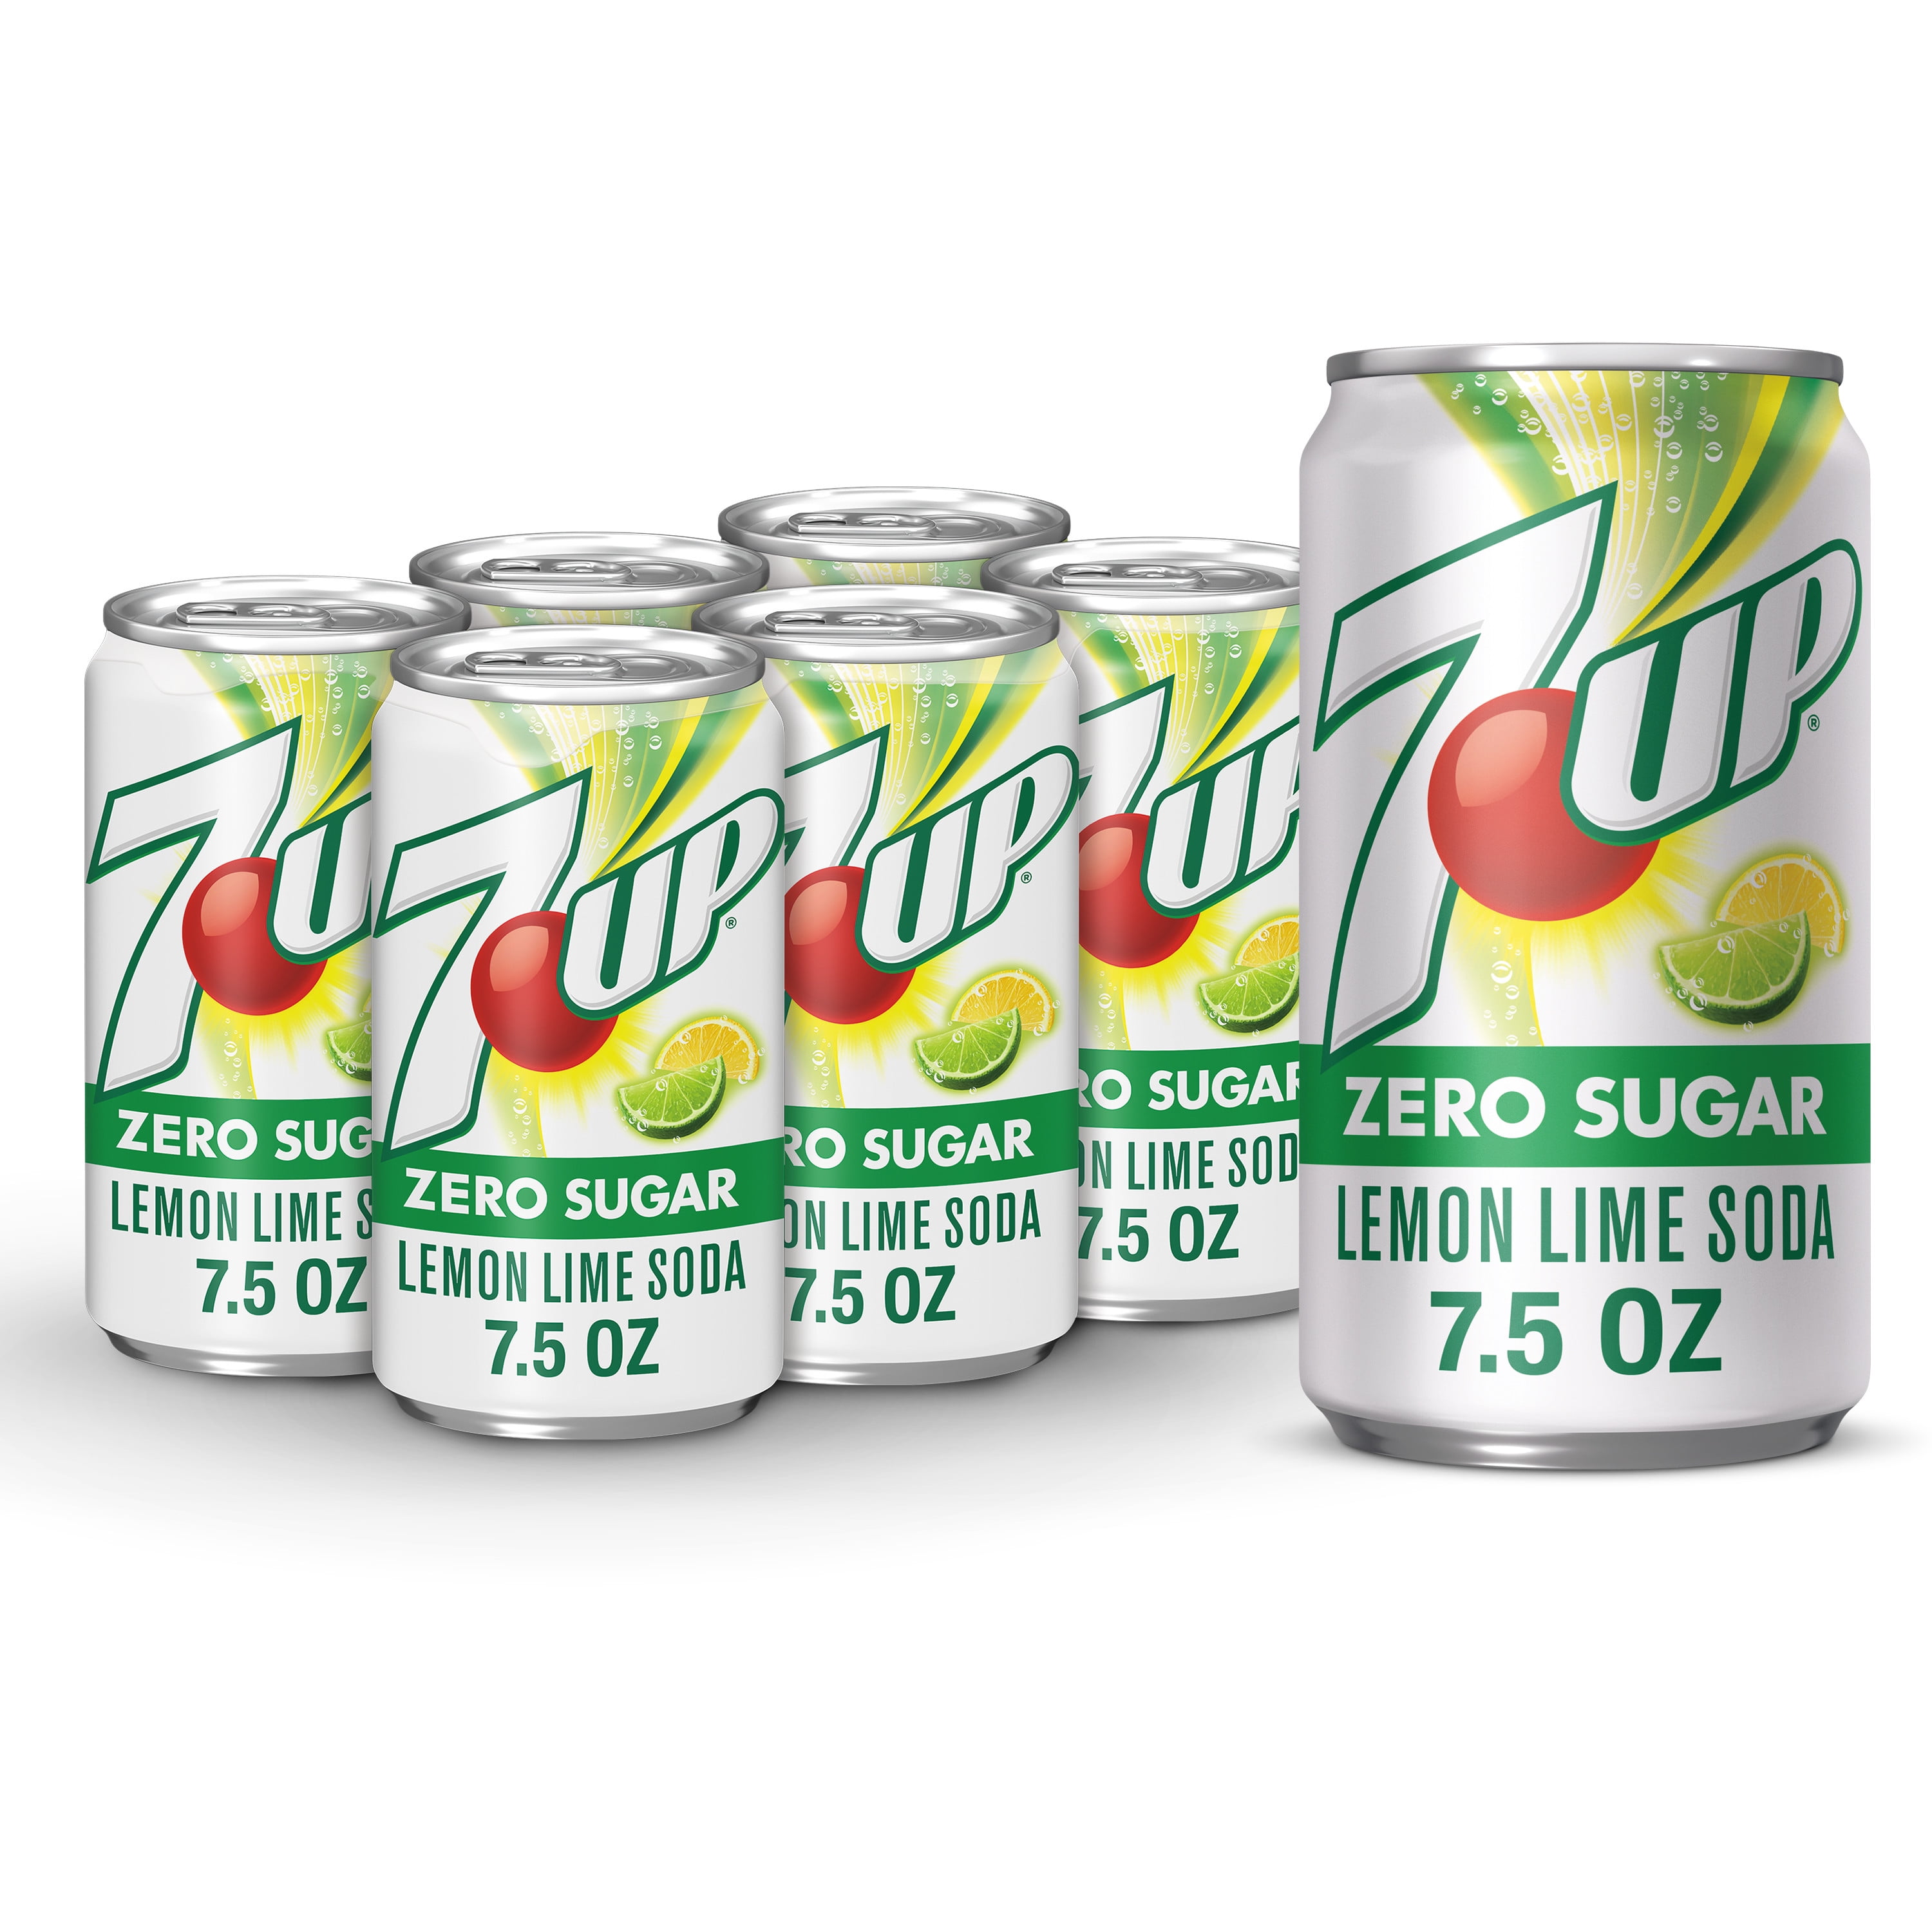 7UP Zero Sugar Lemon and Lime Soda Pop, 7.5 fl oz, 6 Pack Cans